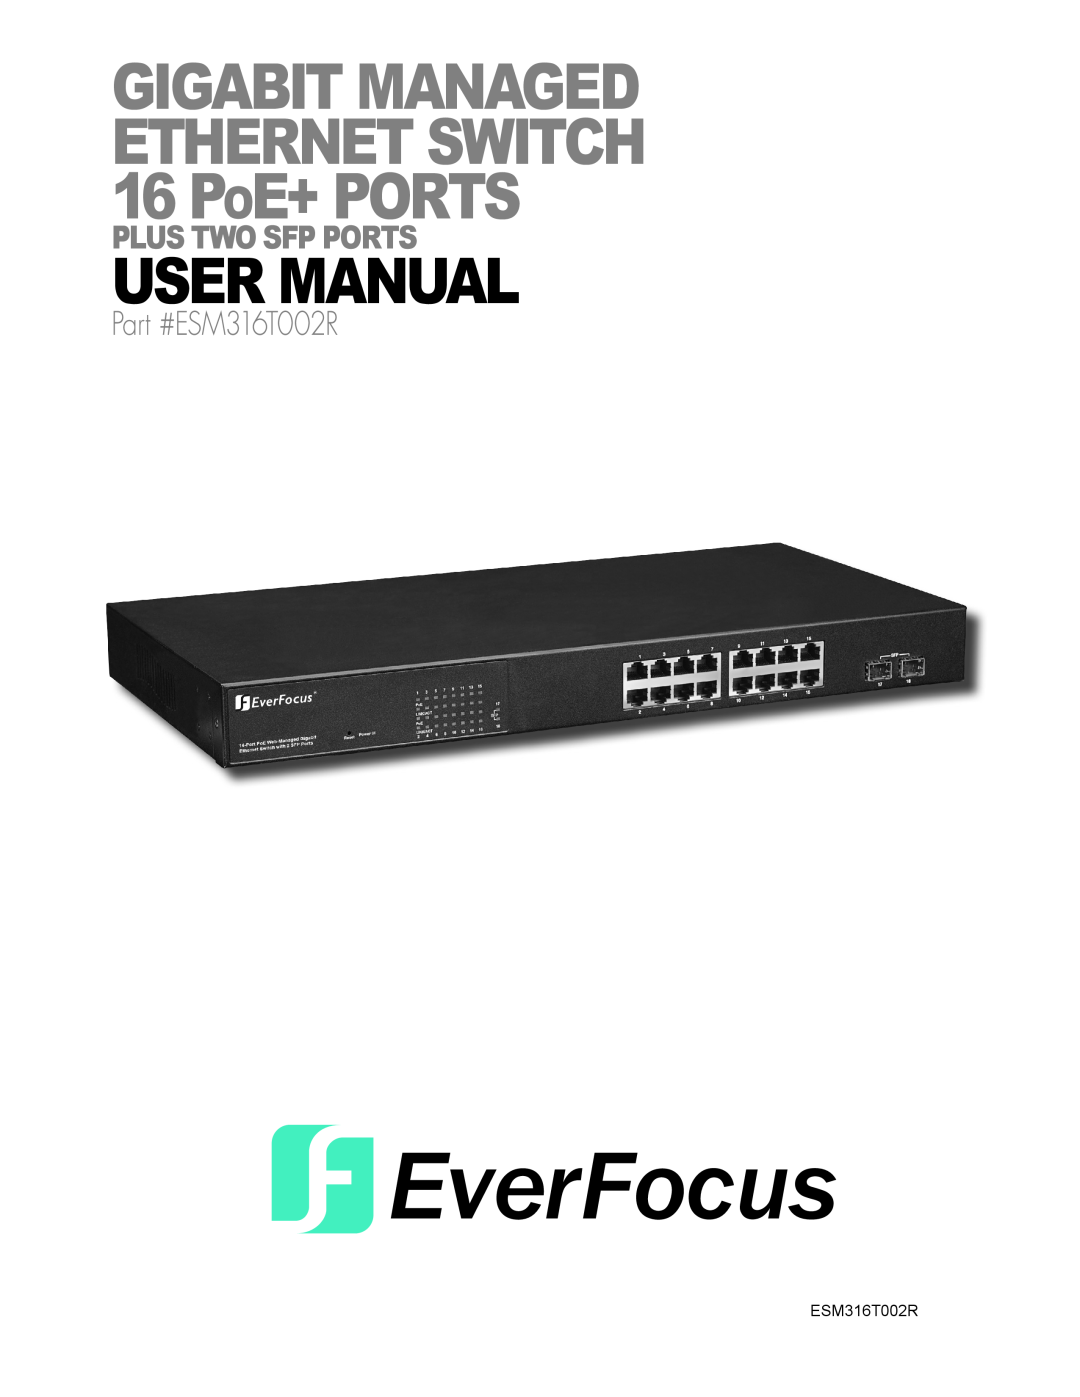 EverFocus ESM316T002R user manual User Manual, GIGABIT MANAGED ETHERNET SWITCH 16 PoE+ PORTS, Plus Two Sfp Ports 